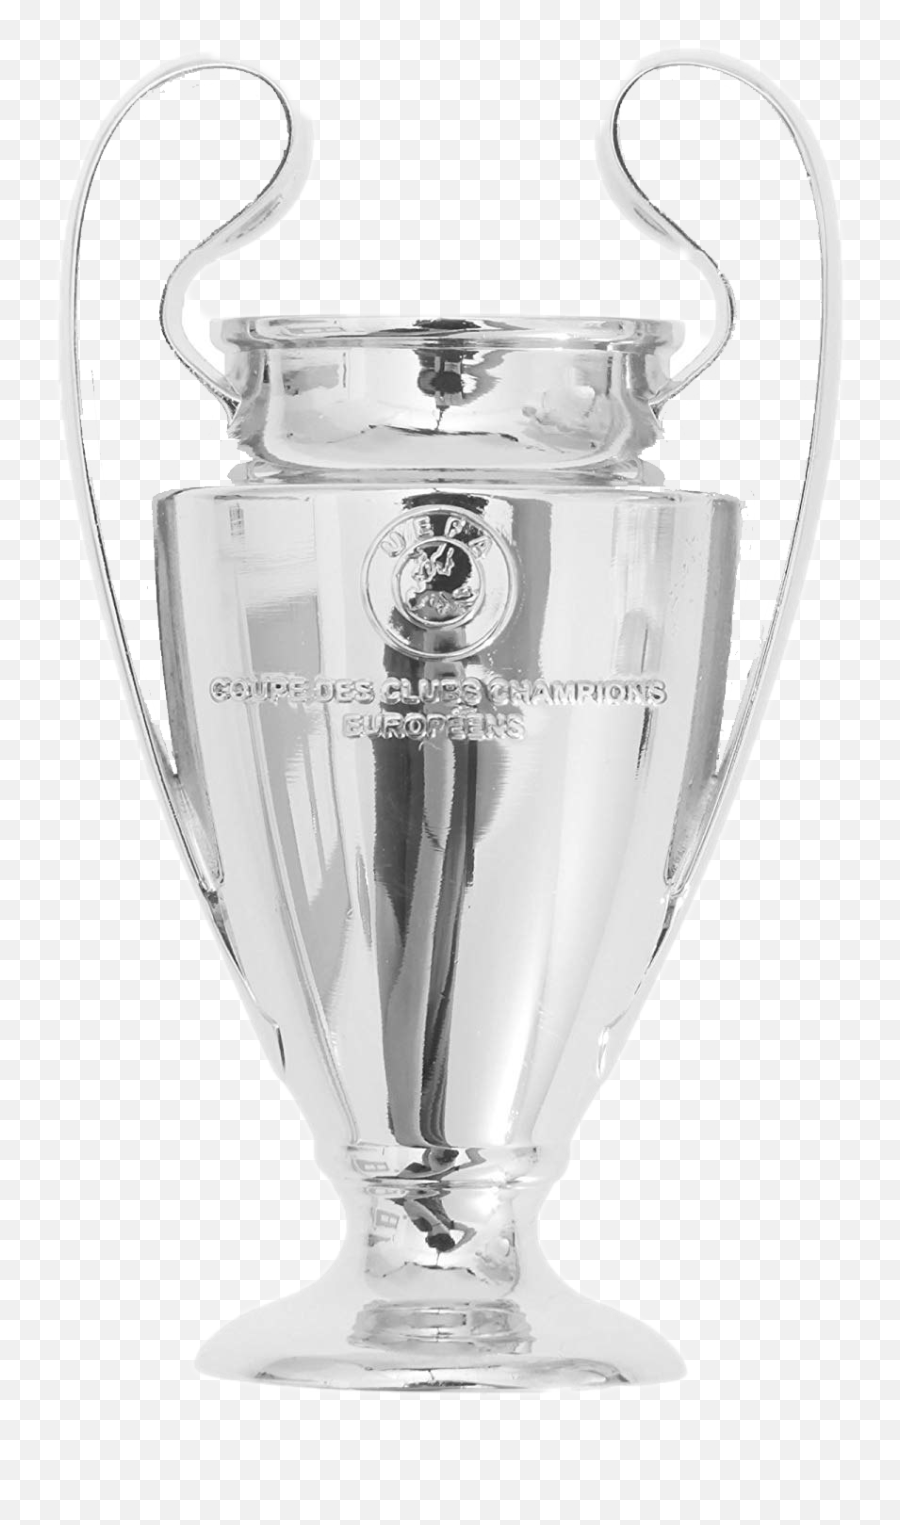 Uefa Champions League Trophy Png Image - Uefa Champions League Trophy,Trophy Png